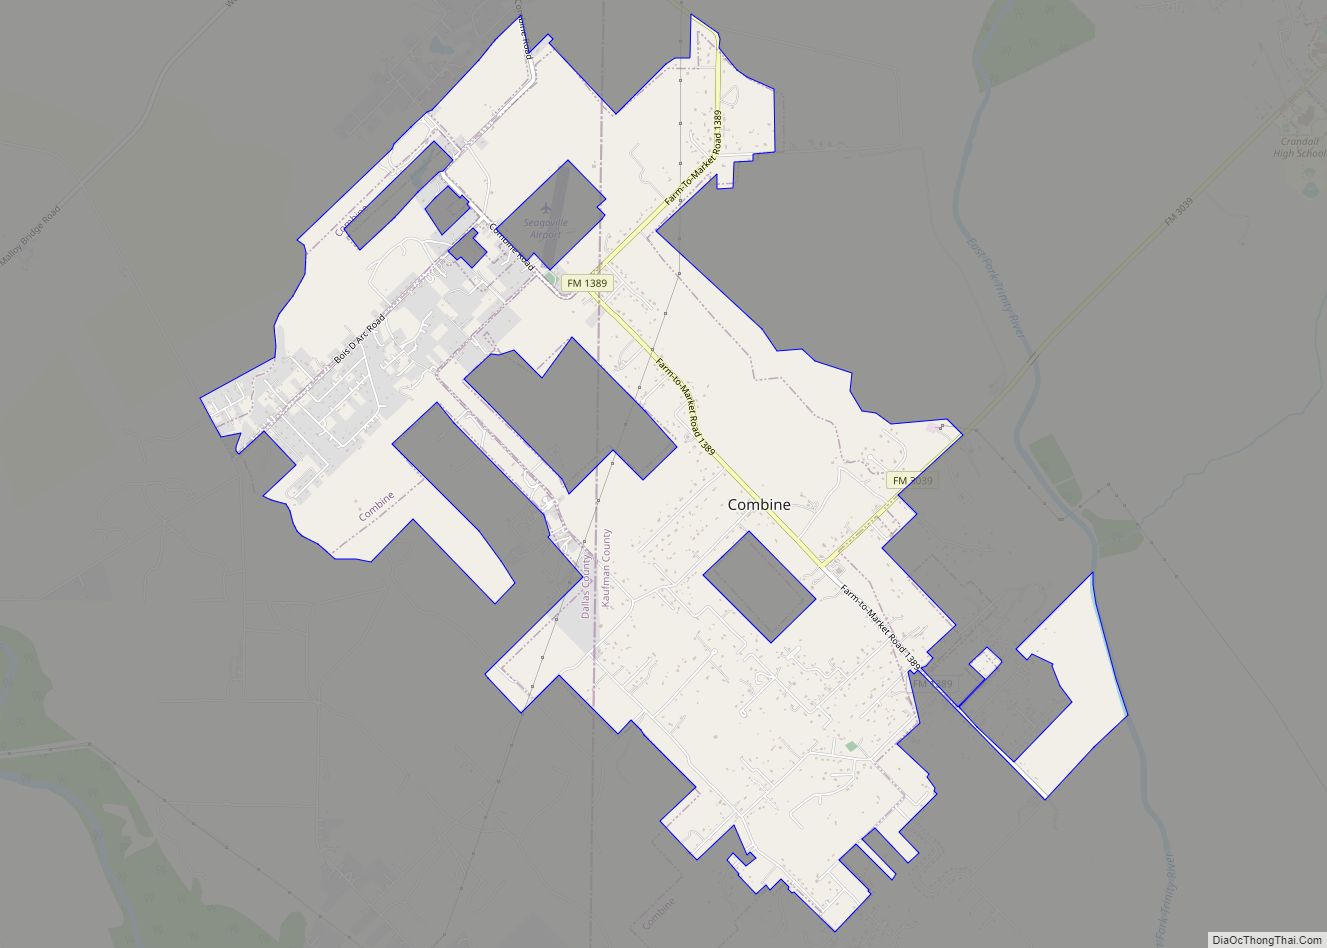 Map of Combine city